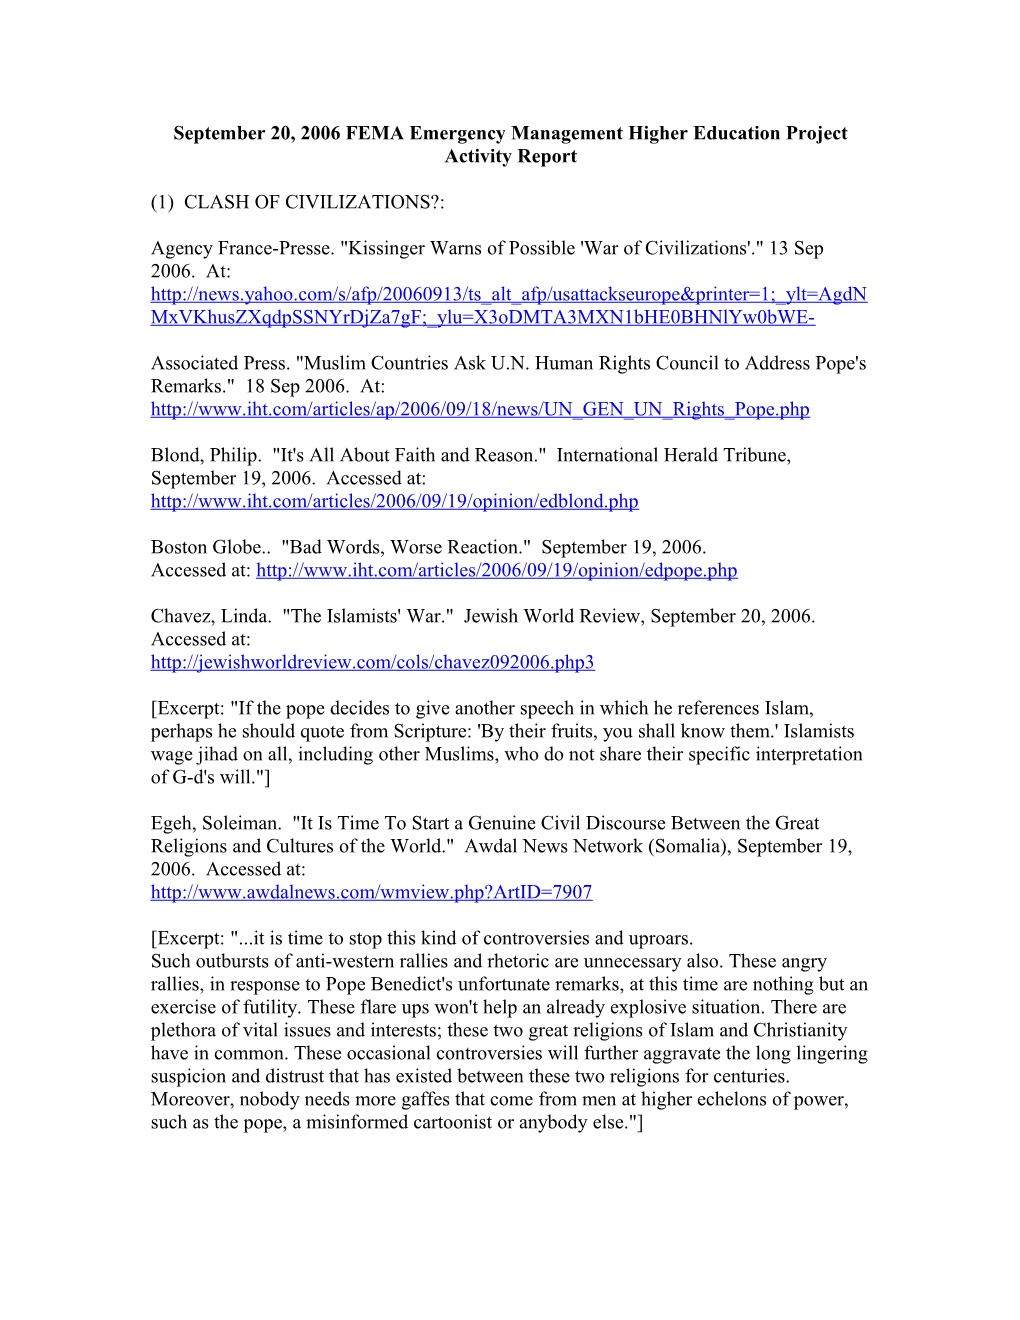 September 20, 2006 FEMA Emergency Management Higher Education Project Activity Report